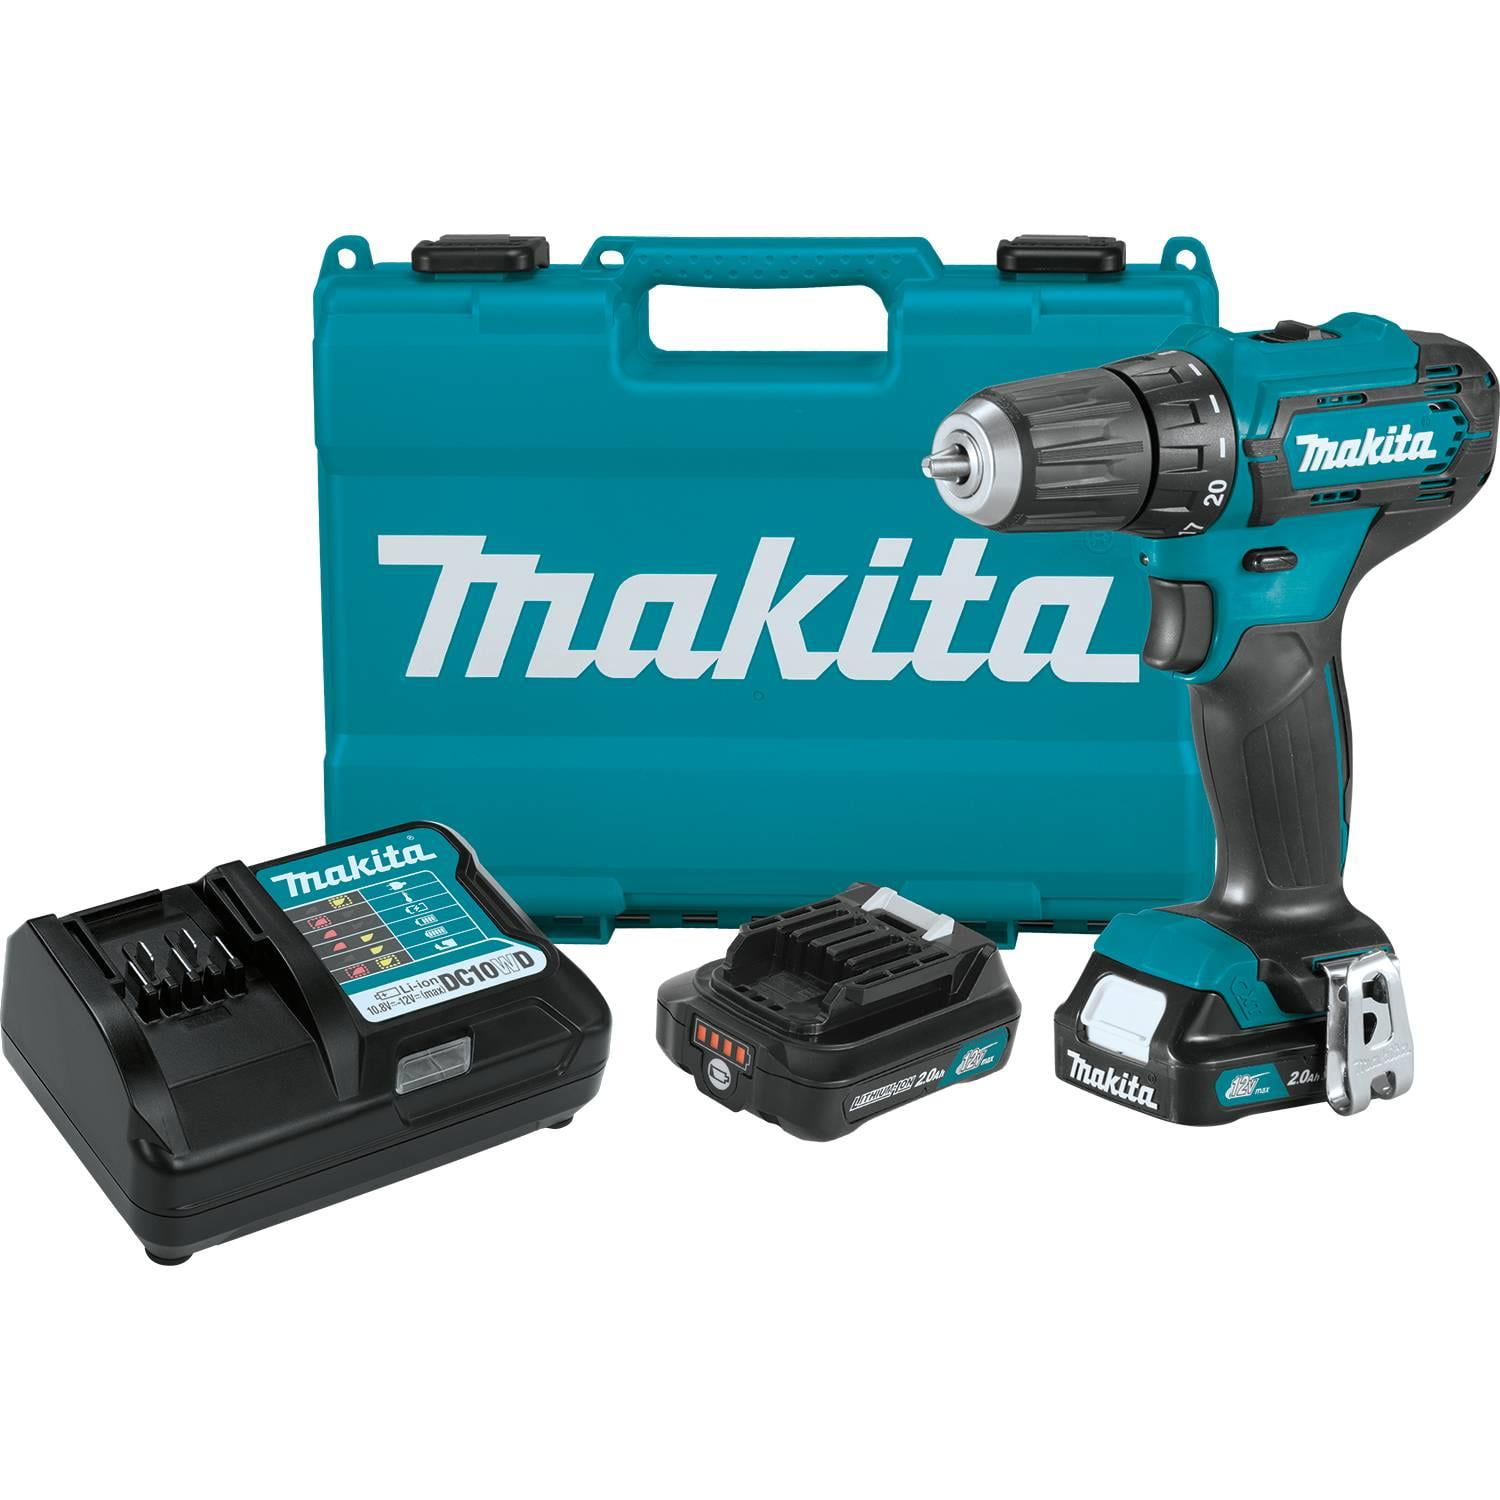 Makita 12v Li-ion Drill Driver and Impact Driver Combo Kit 